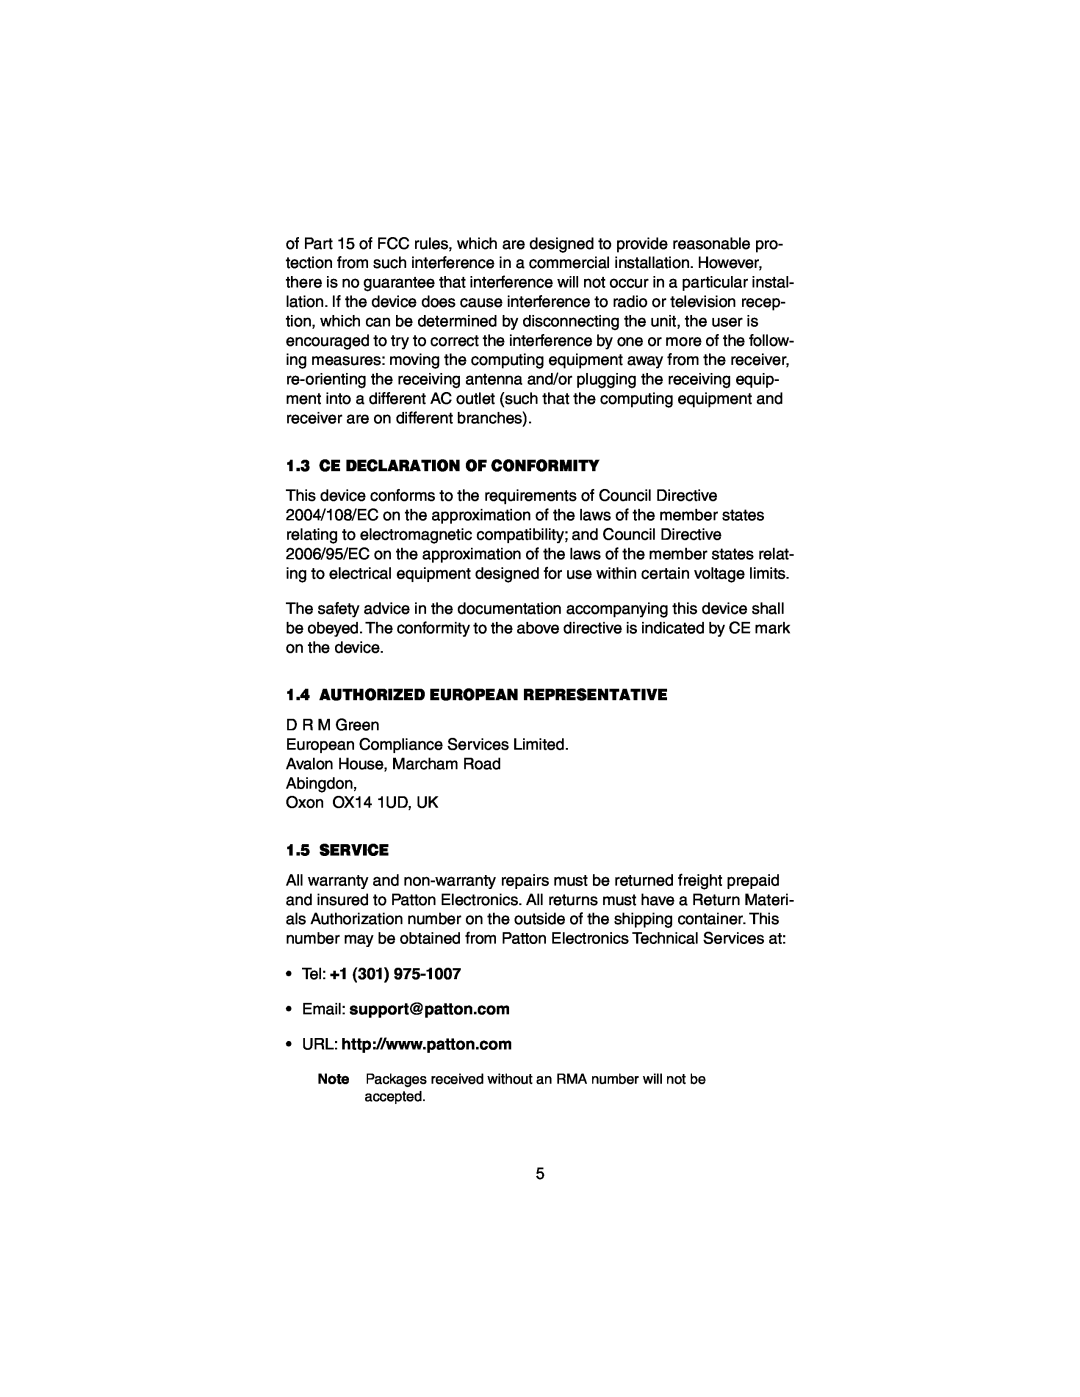 Patton electronic 2158B user manual Ce Declaration Of Conformity, Authorized European Representative, Service 